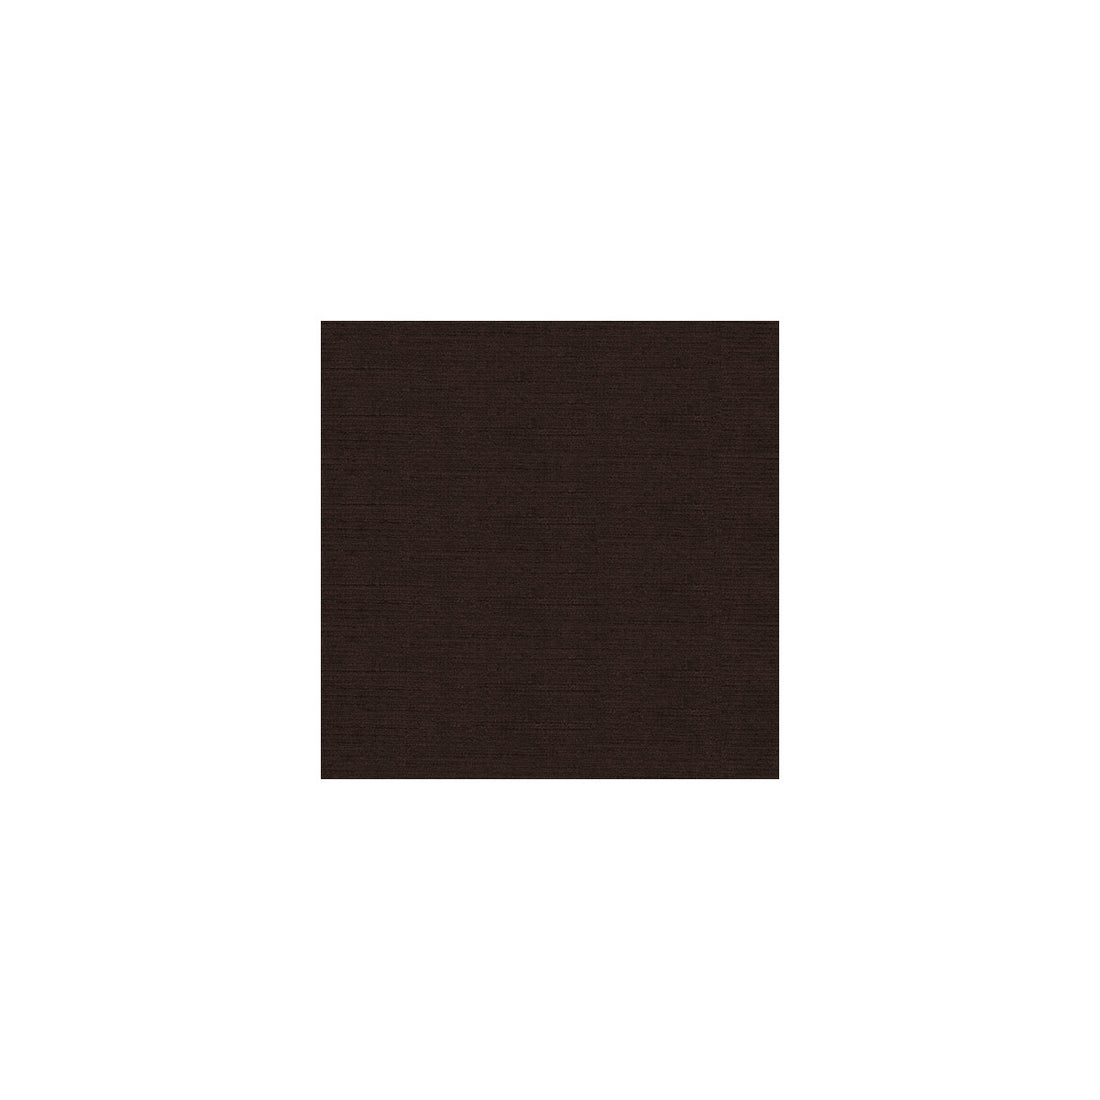 Venetian fabric in brown color - pattern 31326.6666.0 - by Kravet Design